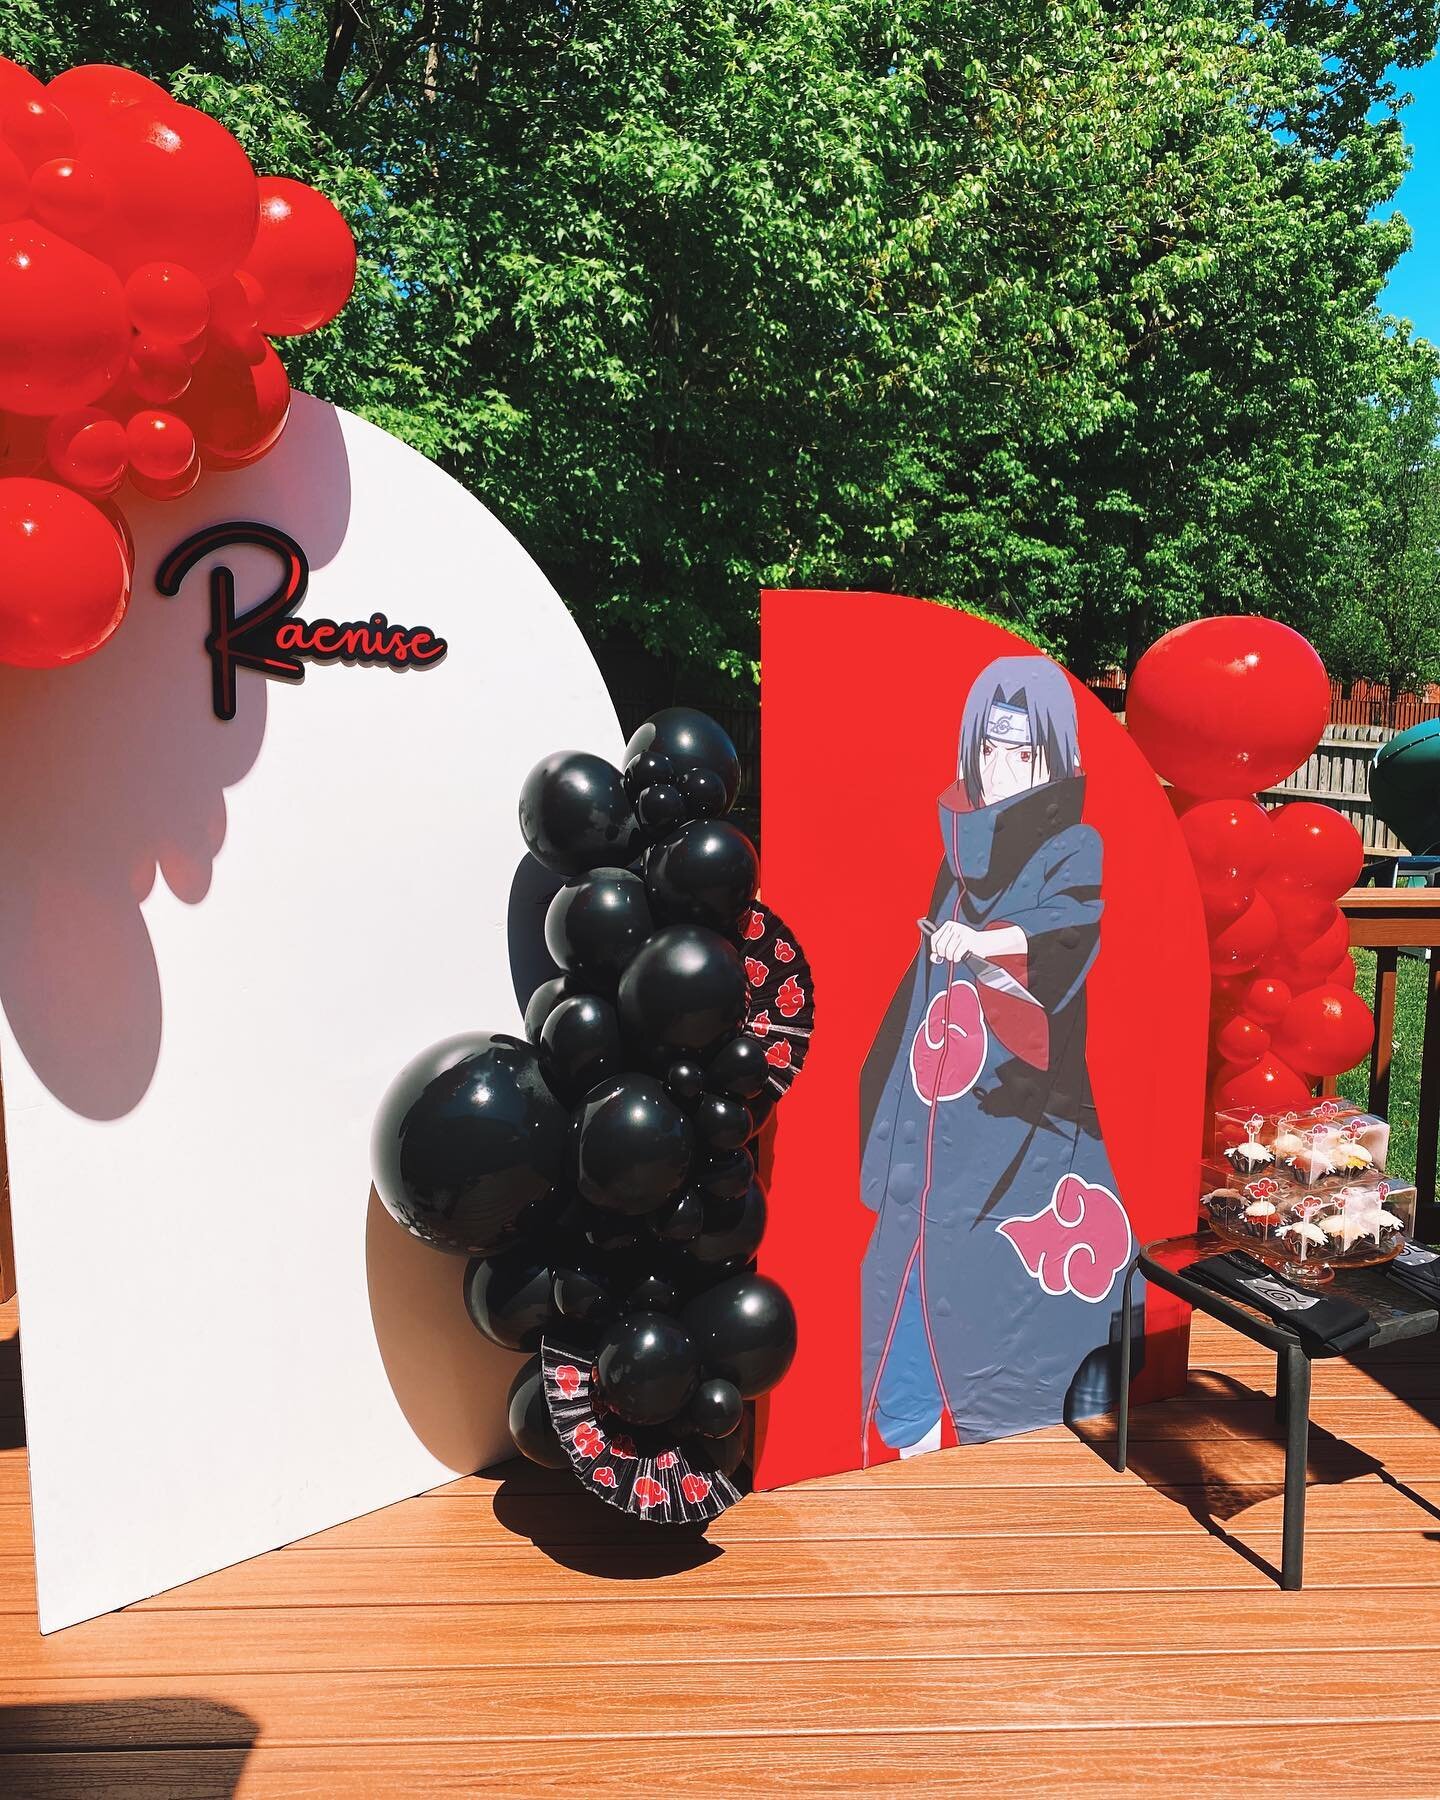 Team Itachi! Happy Birthday Raenise🖤❤️
Event styling: @papercraneparties 
Signage: @efsicreations 
#animeparty #itachitheme #paintparty #partyideas #partydecorations #sipandpaint #itachi #naturopathy #akatsuki #birthdayparty #balloonstylist #balloon